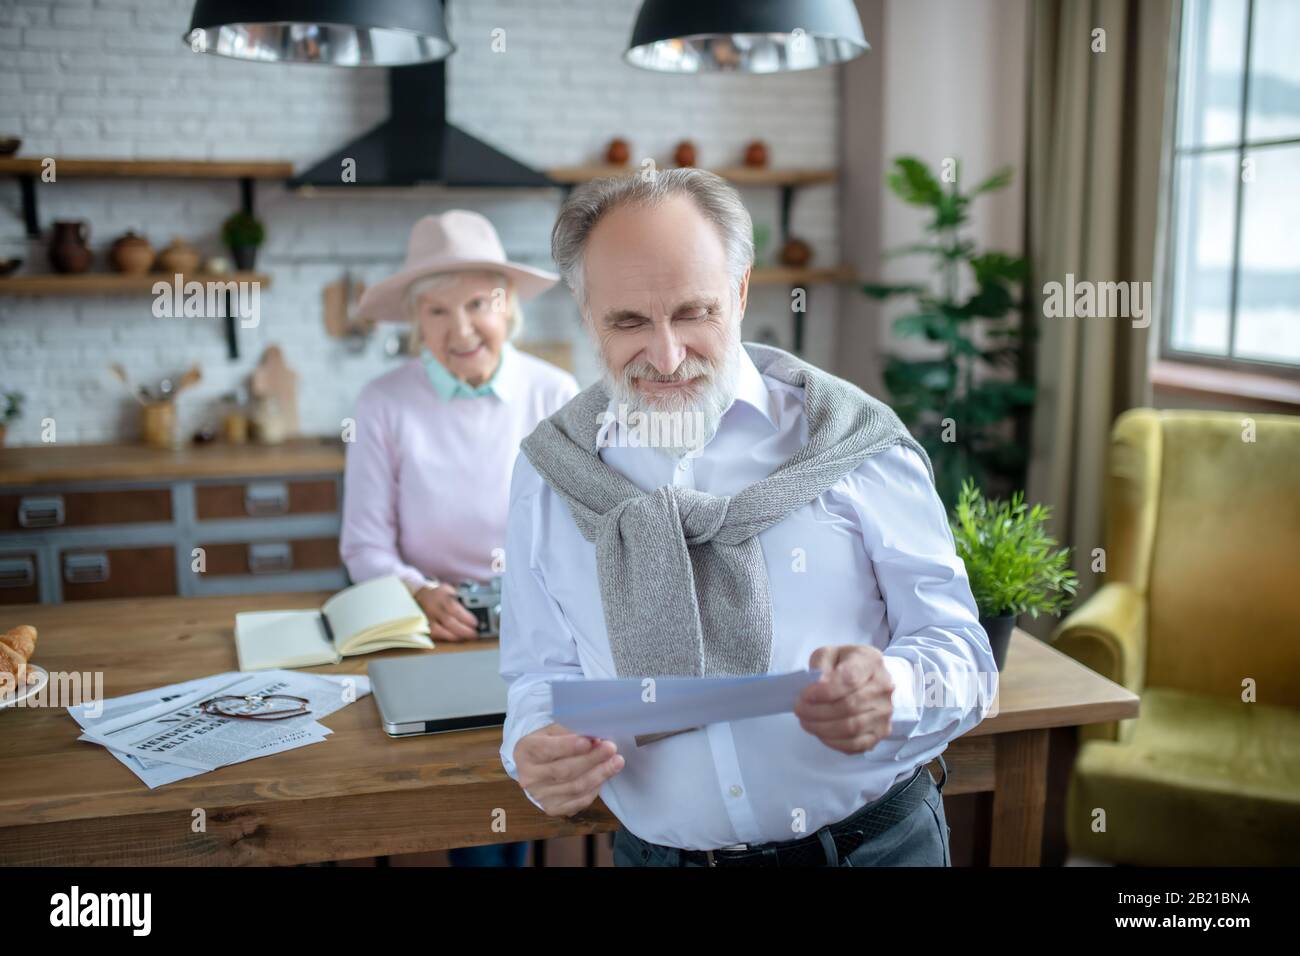 Smiling elderly man reading an important letter Stock Photo